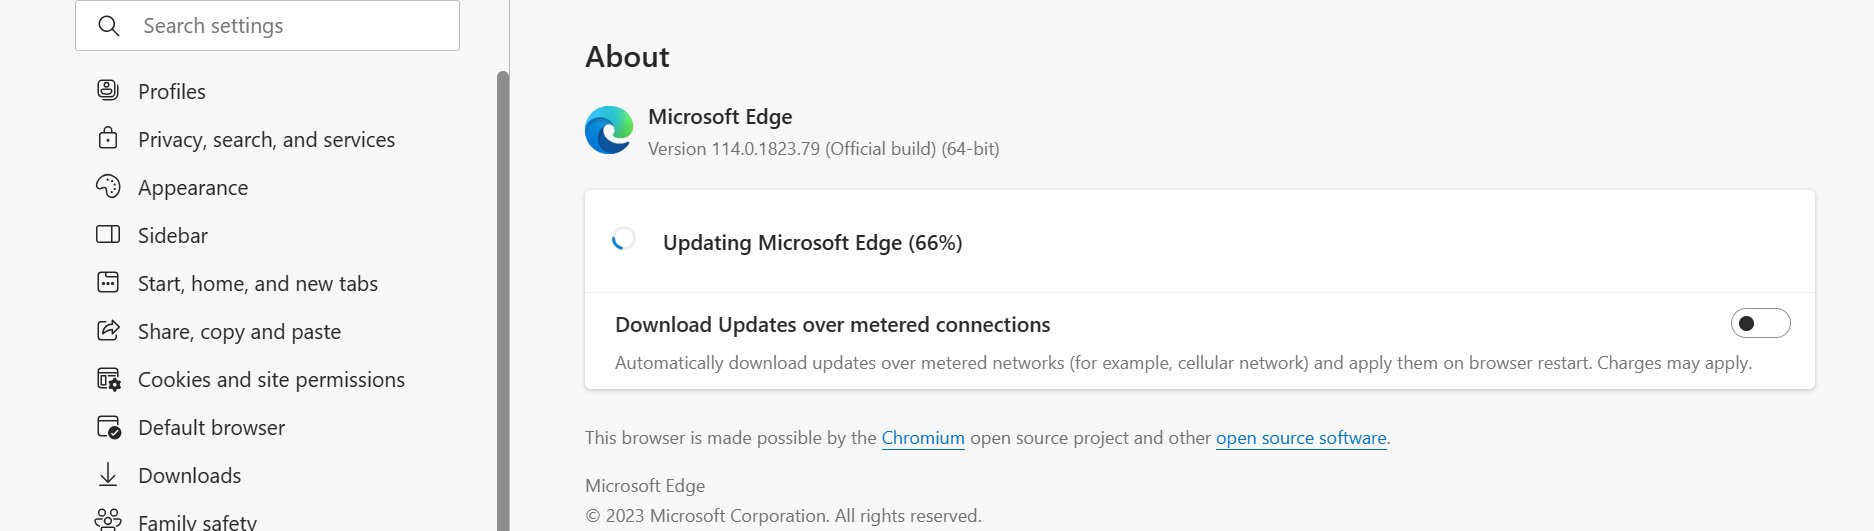 Microsoft Edge updates